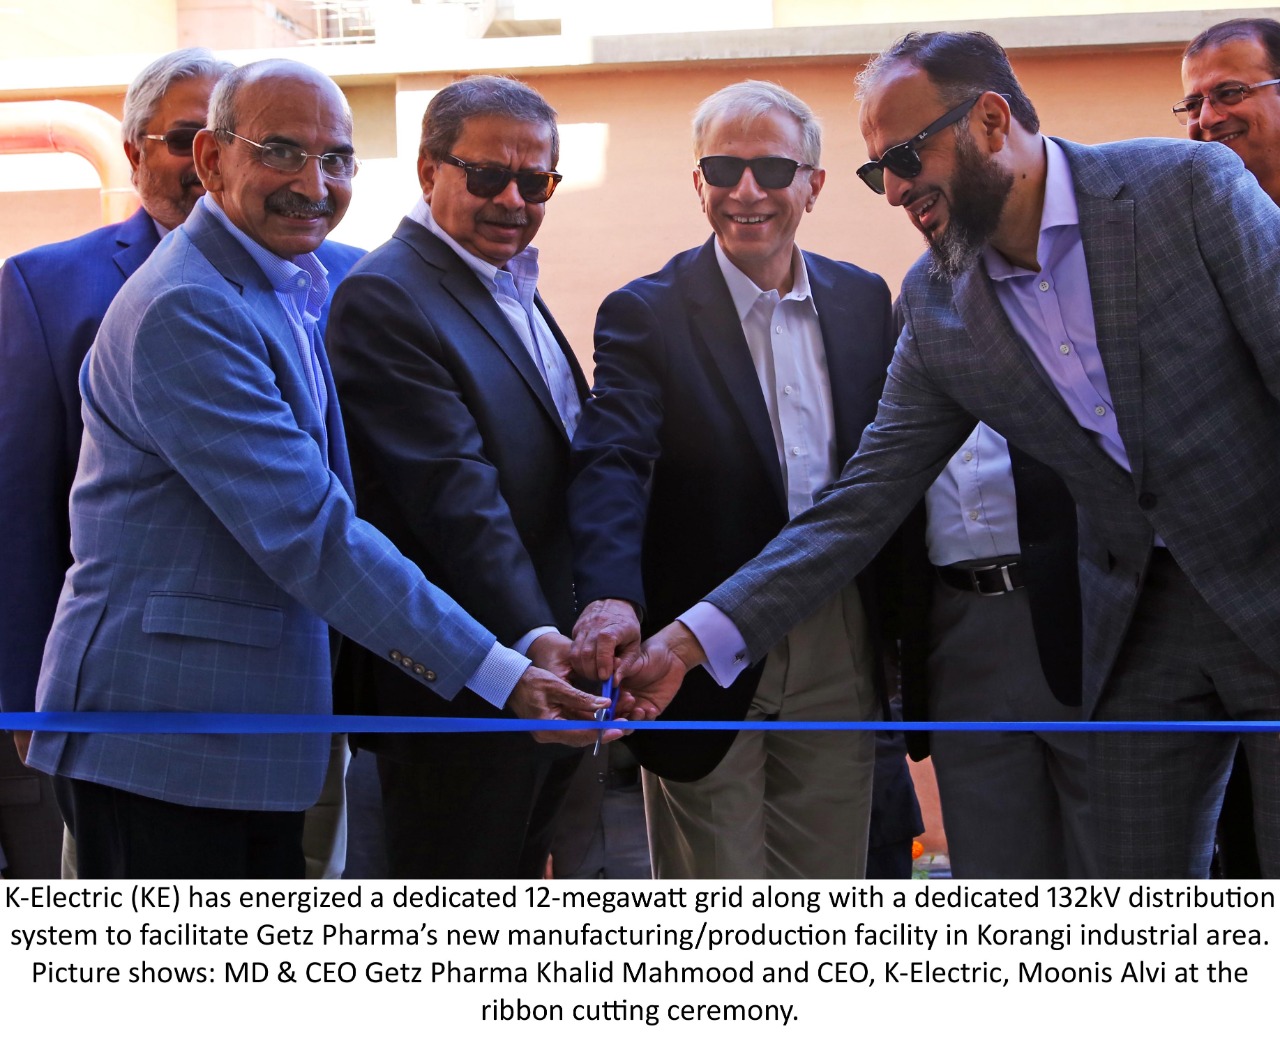 12MW Grid Energized to Facilitate Getz Pharma’s New Plant